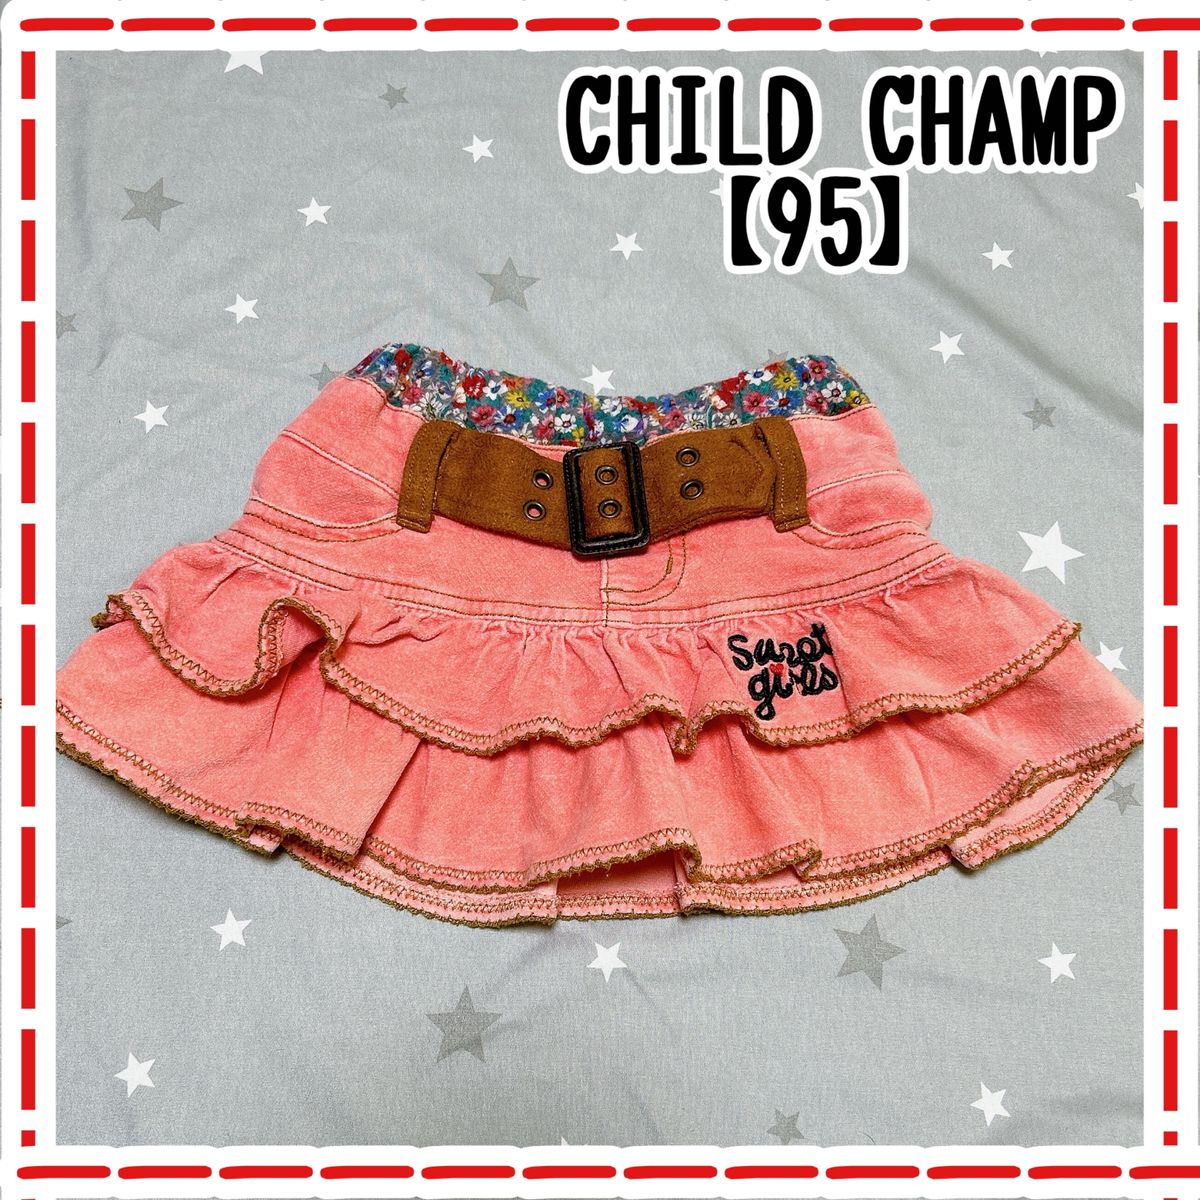 《CHILD CHAMP》ベロアスカート ピンク【95】女の子 子供服